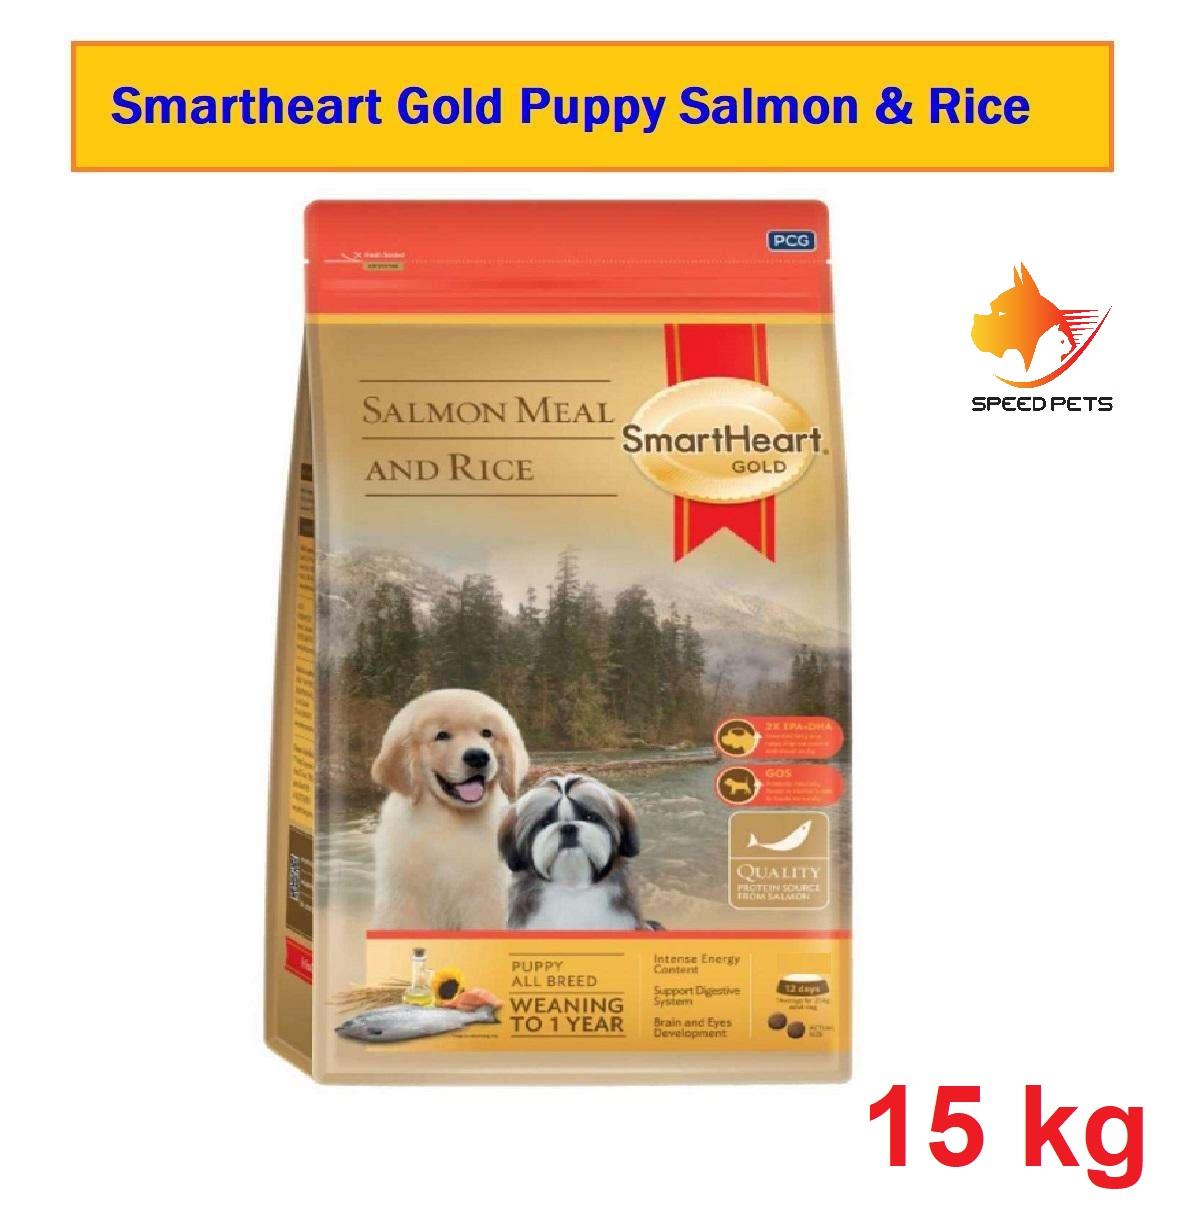 Smartheart Gold Puppy Salmon & Rice 15kg. อาหารลูกสุนัข แซลมอน ข้าว 15กก.